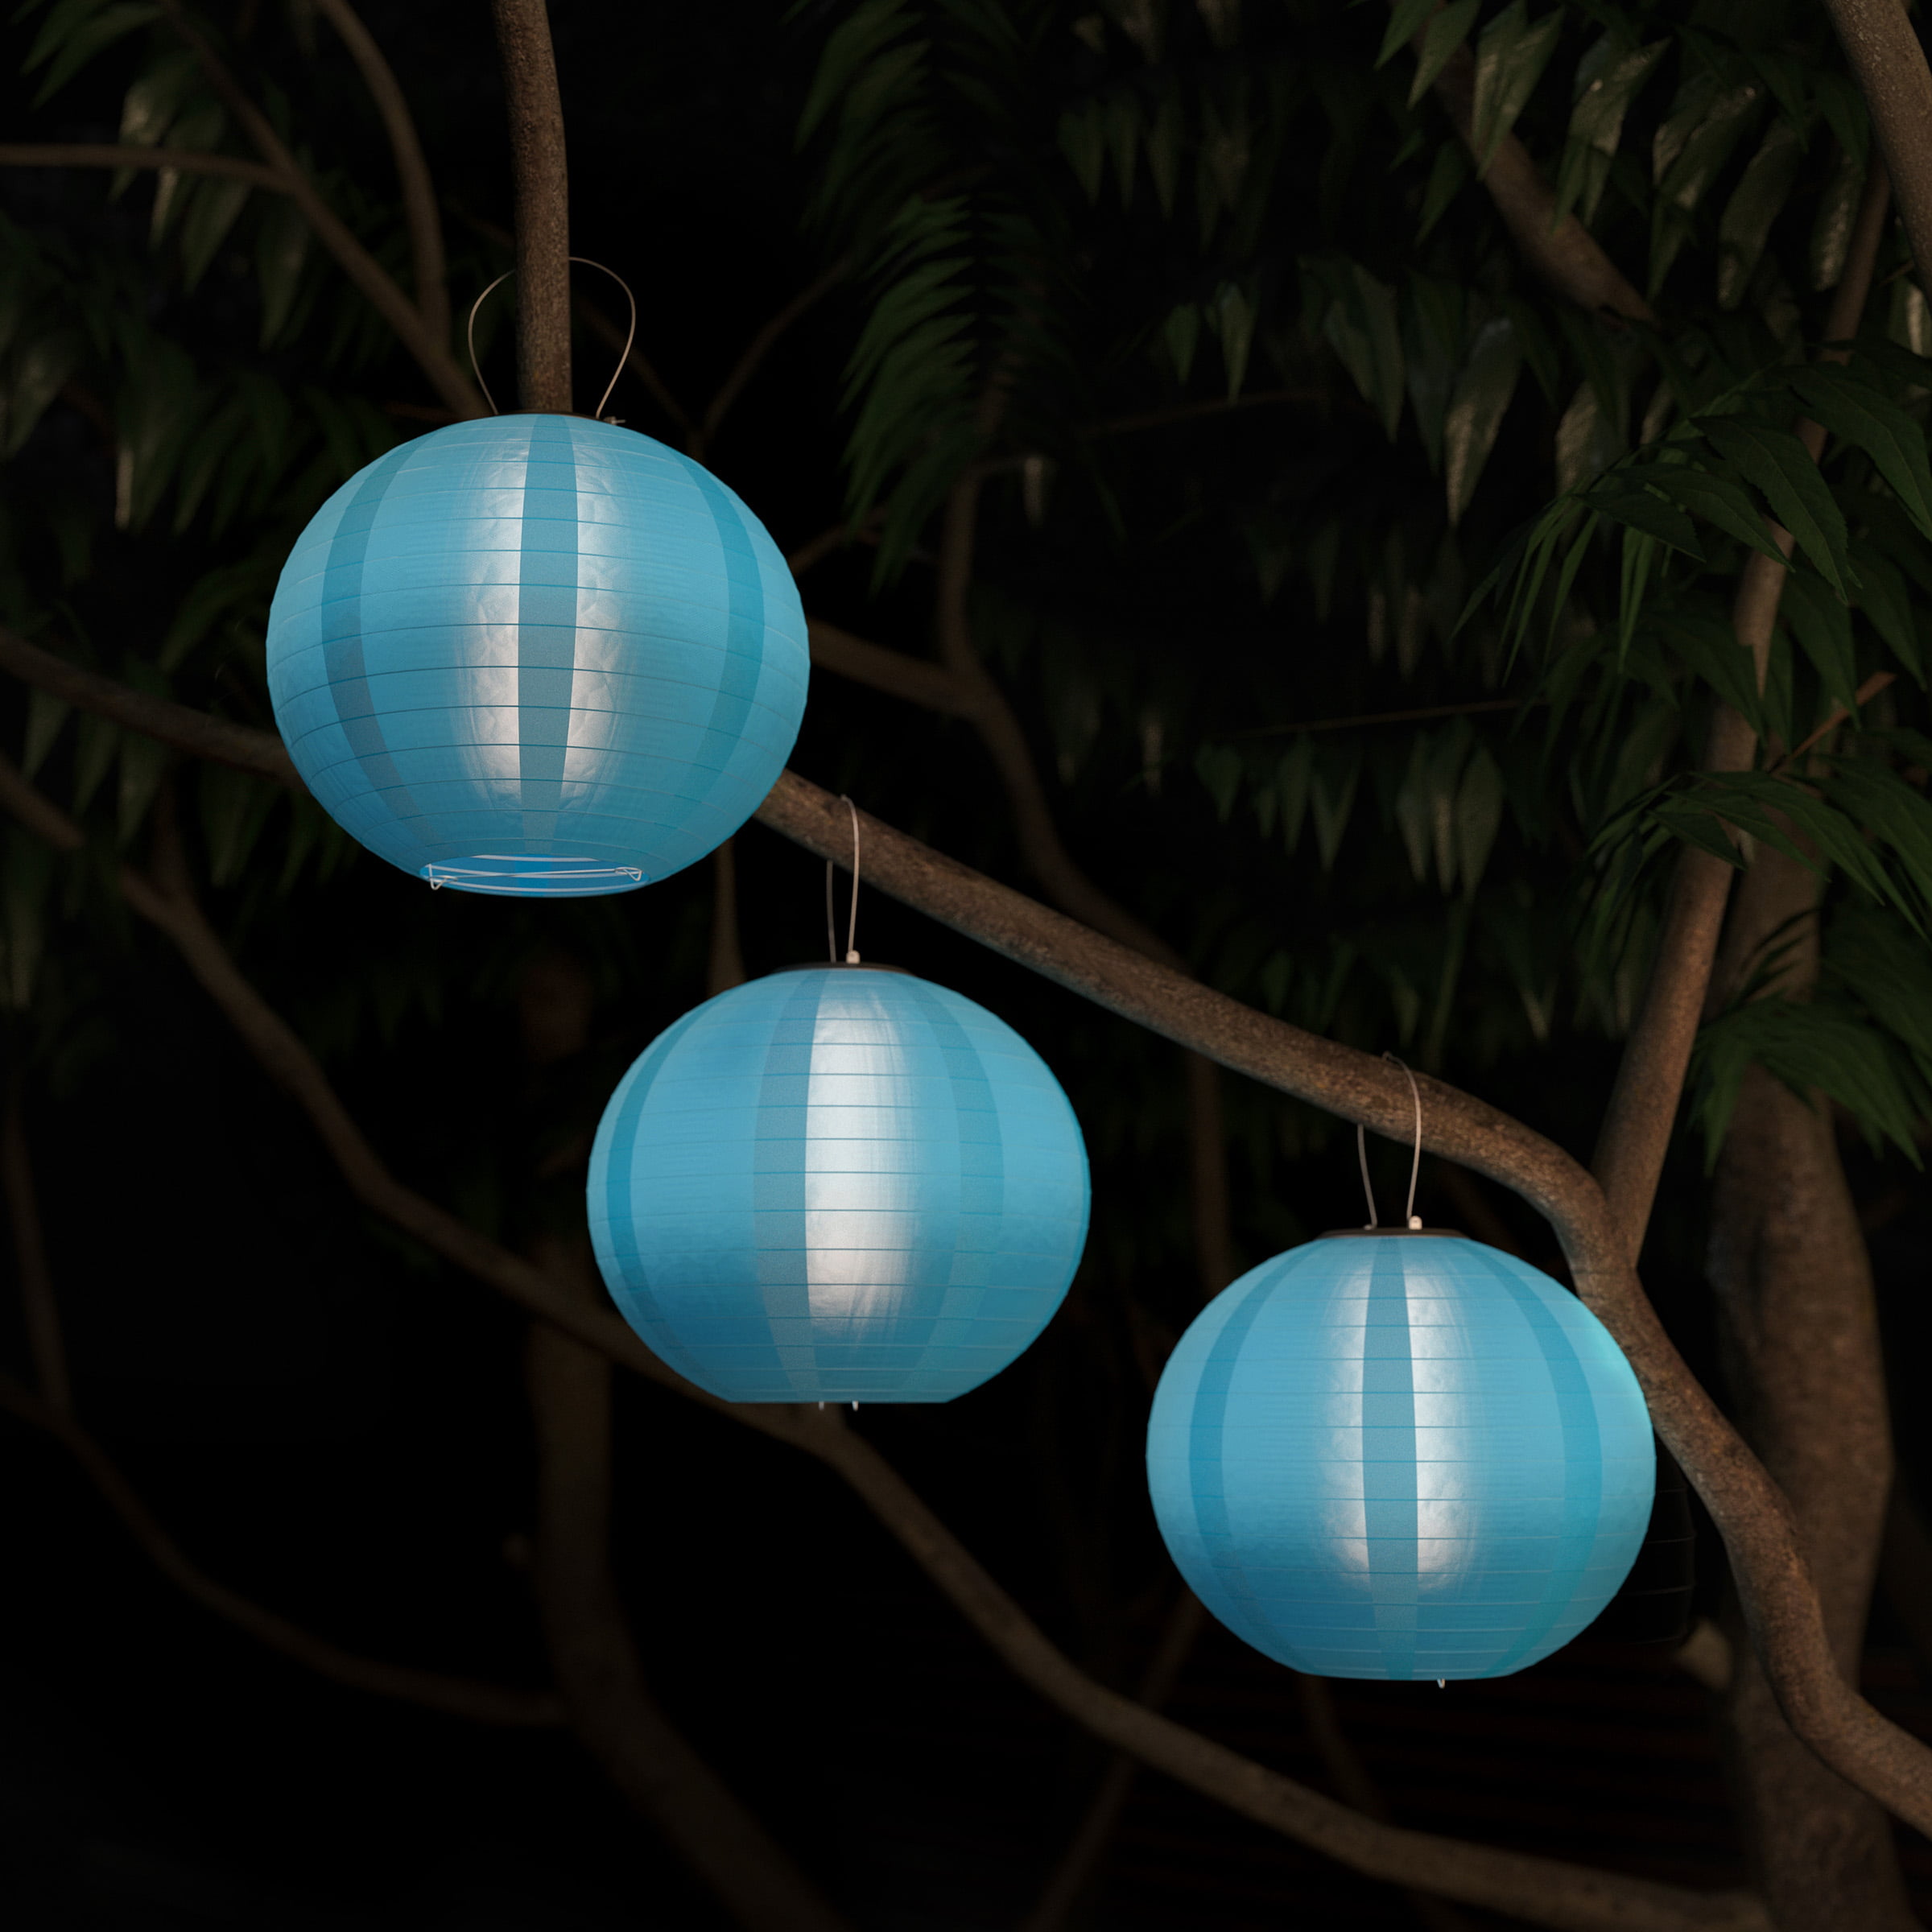 Chinese Lanterns Hanging Fabric Lamps, Led Lights For Hanging Paper Lanterns